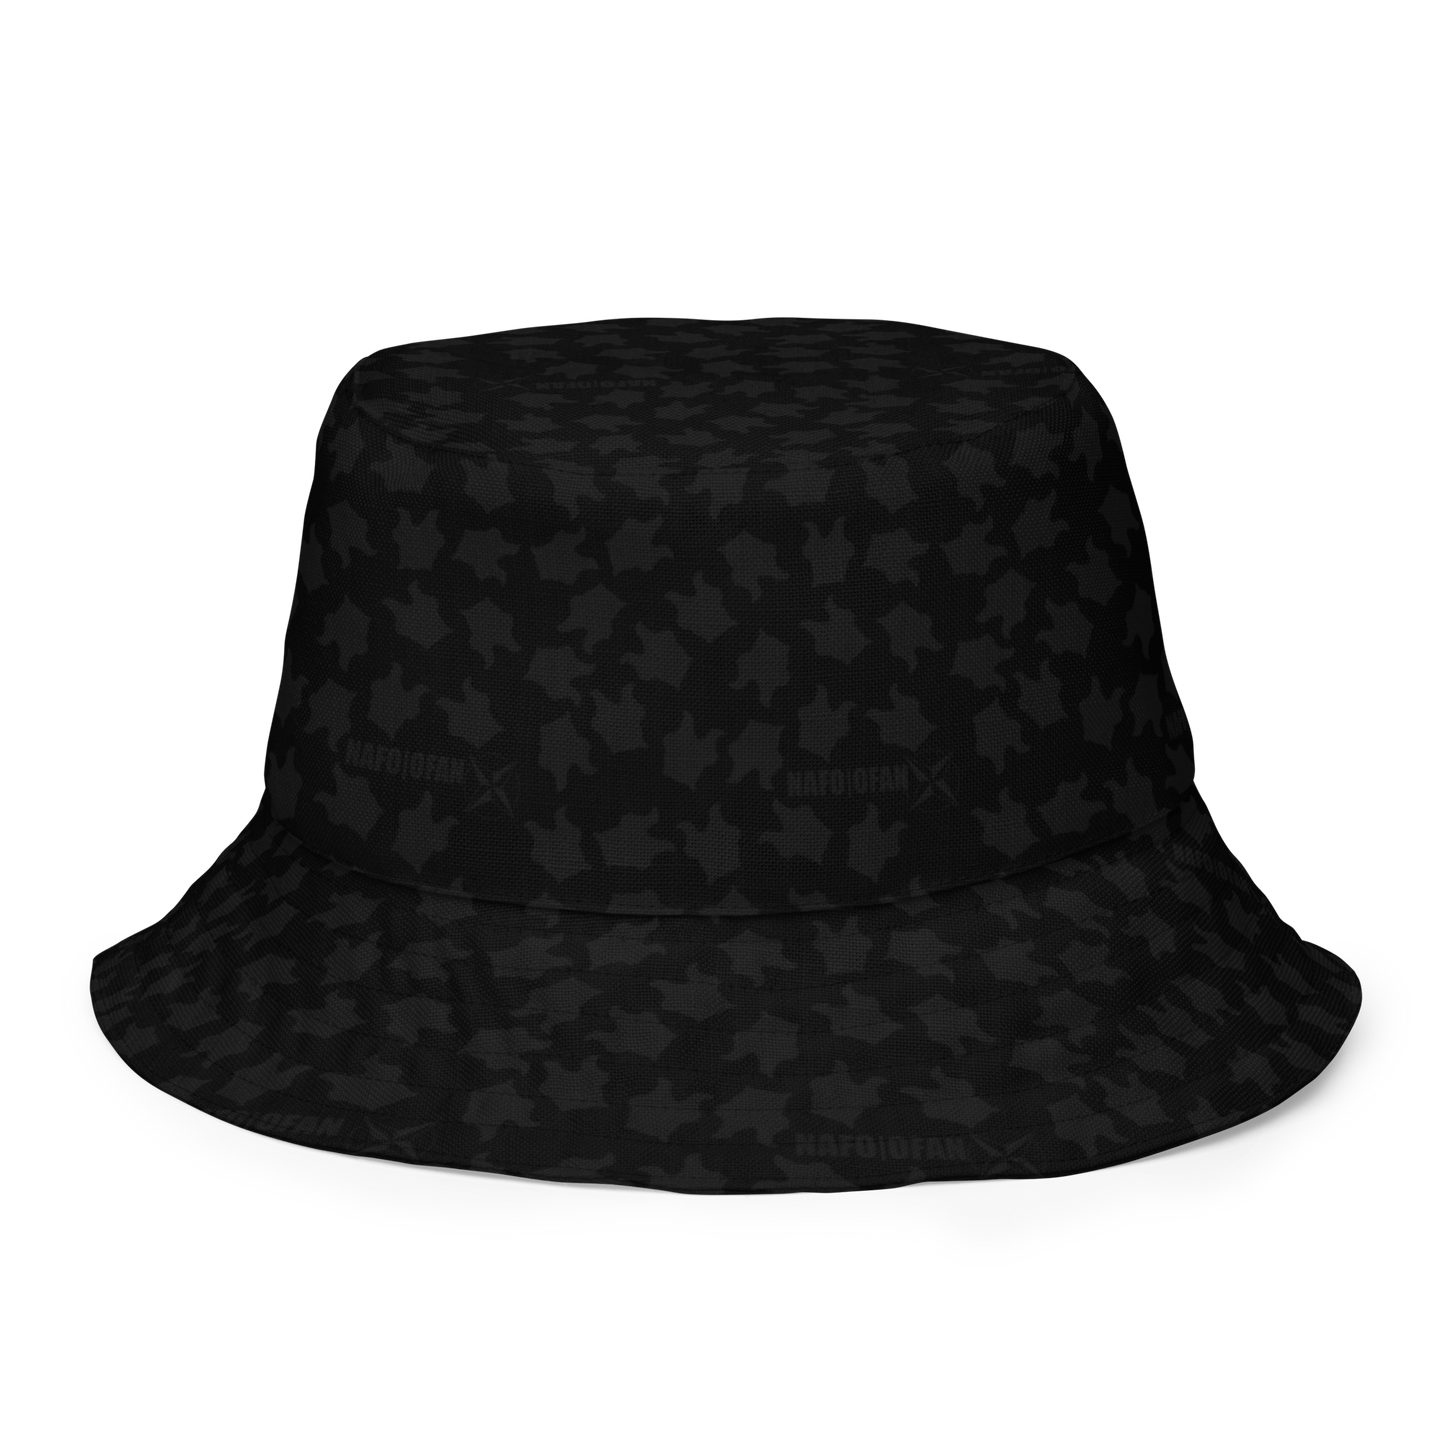 NAFO Fellaflage Bucket Hat